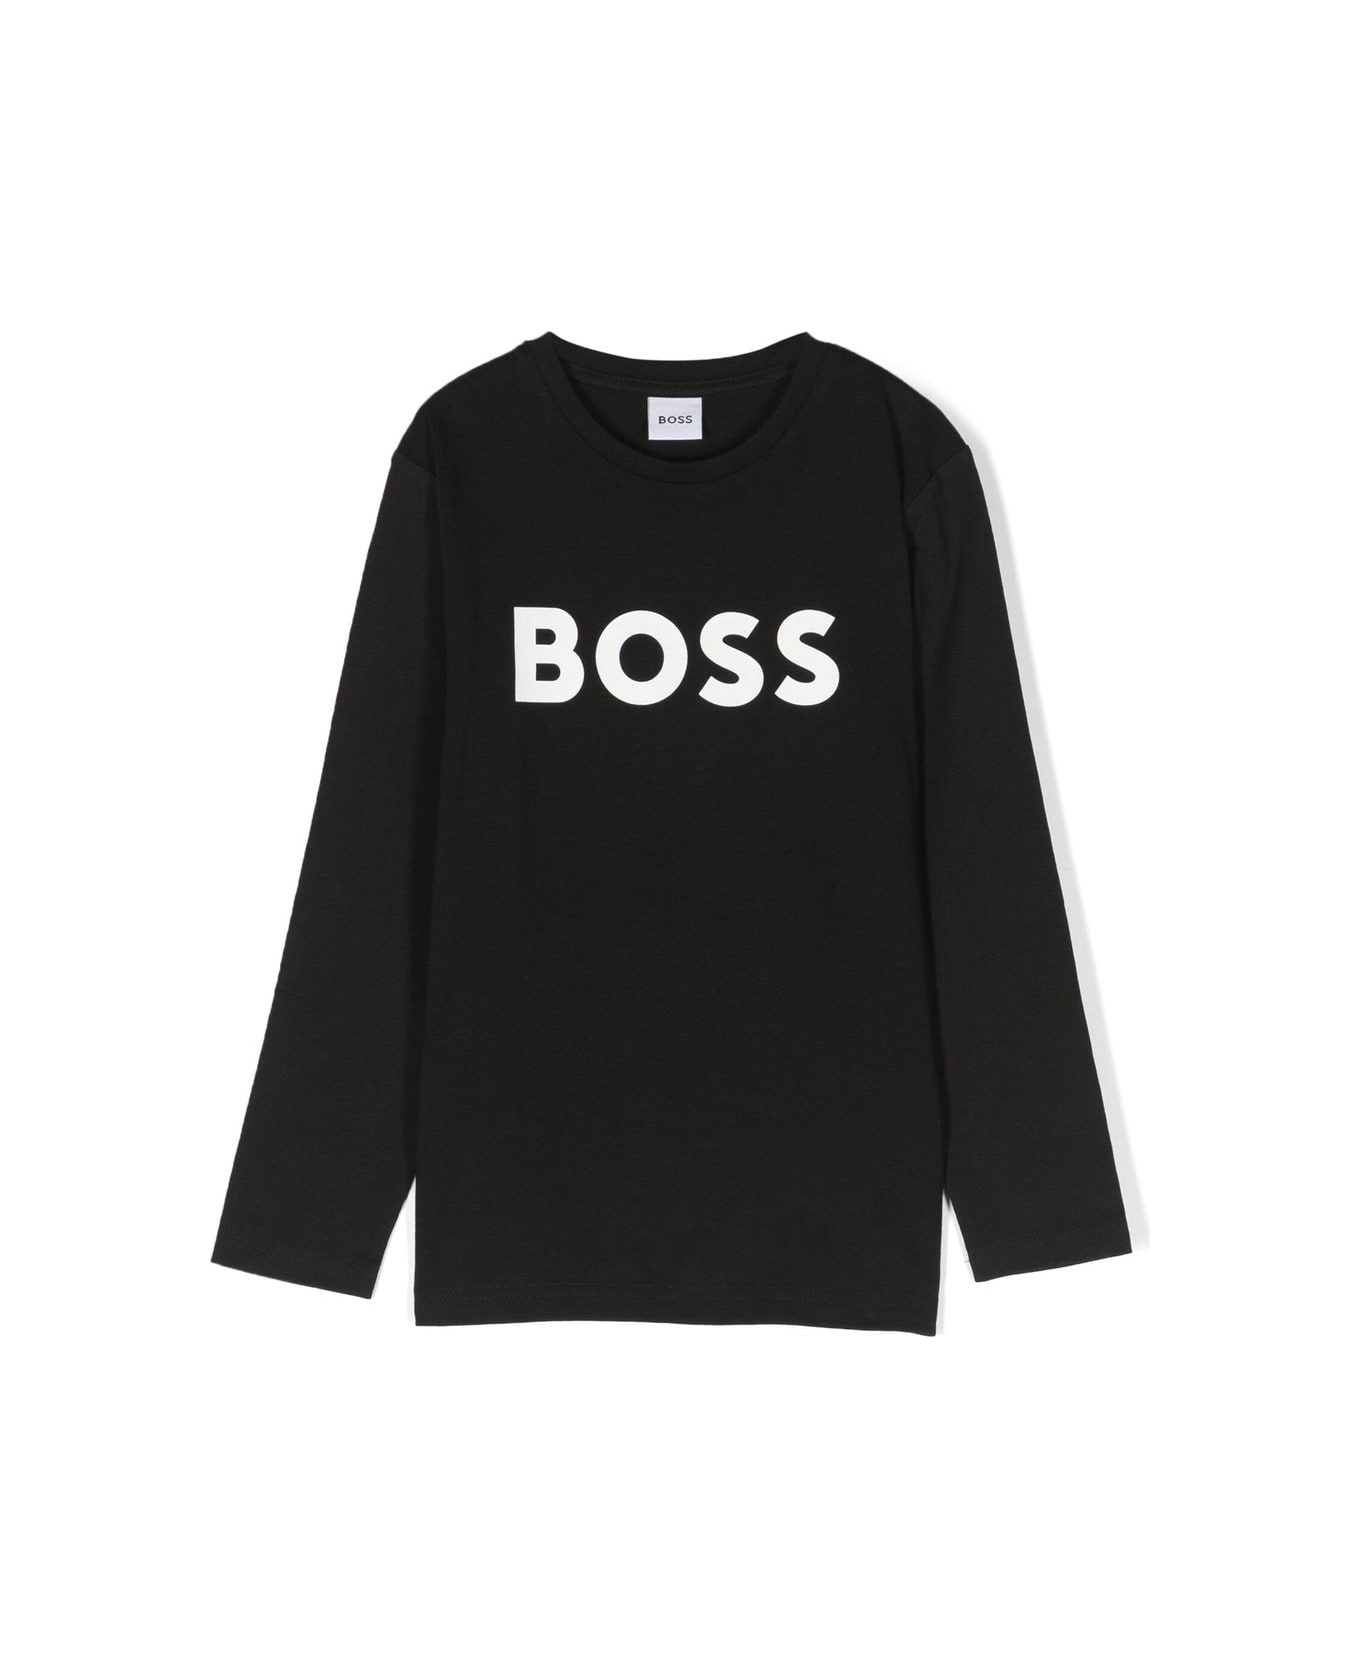 Hugo Boss T-shirt Nera In Jersey Di Cotone Bambino - Nero